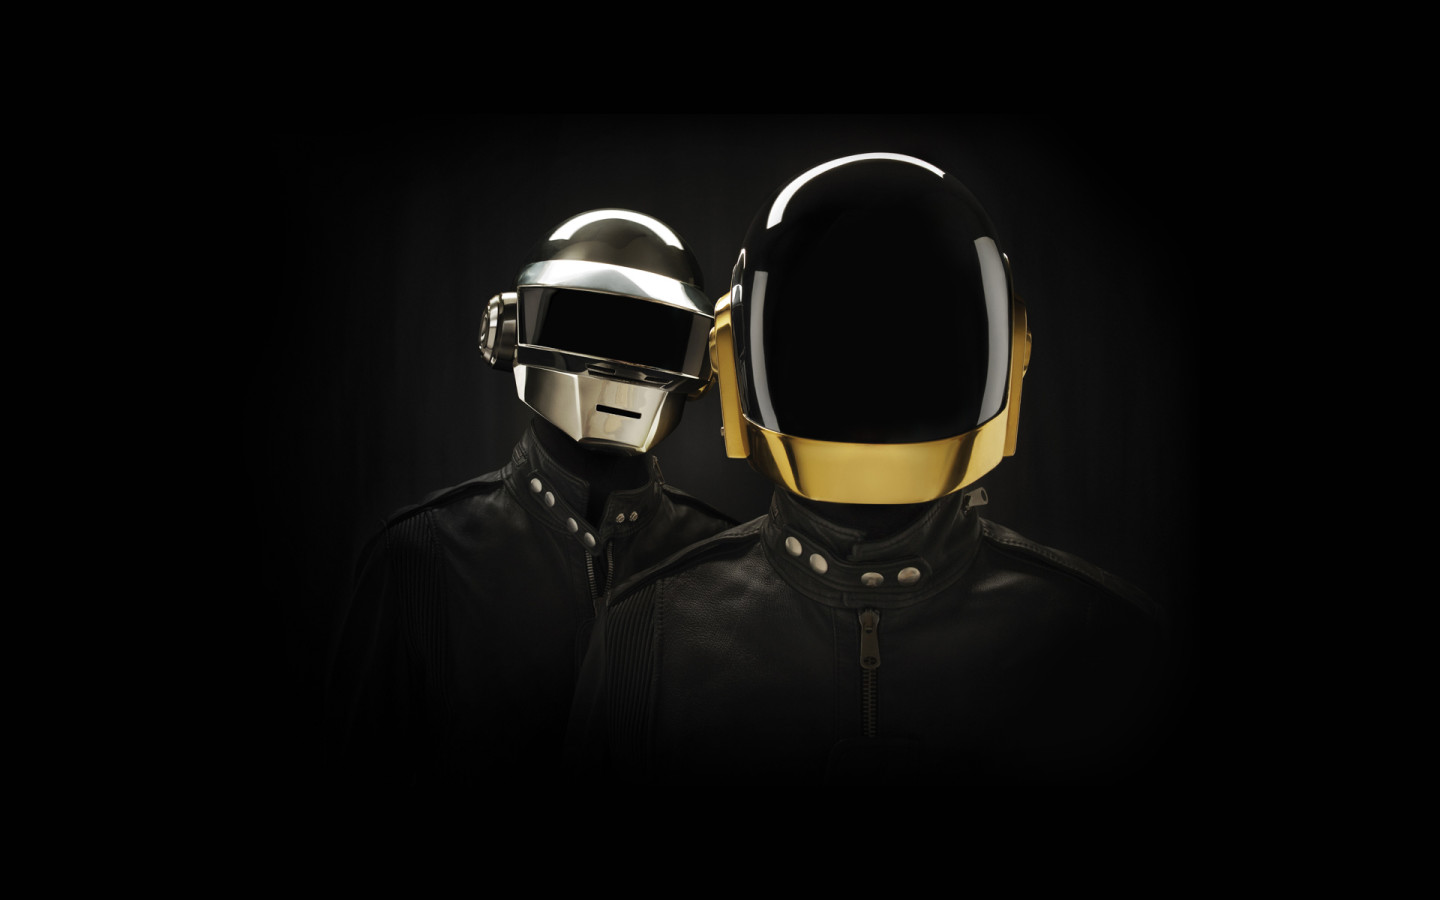 General 1440x900 Daft Punk music black background dark artwork electronic music simple background musician DJ